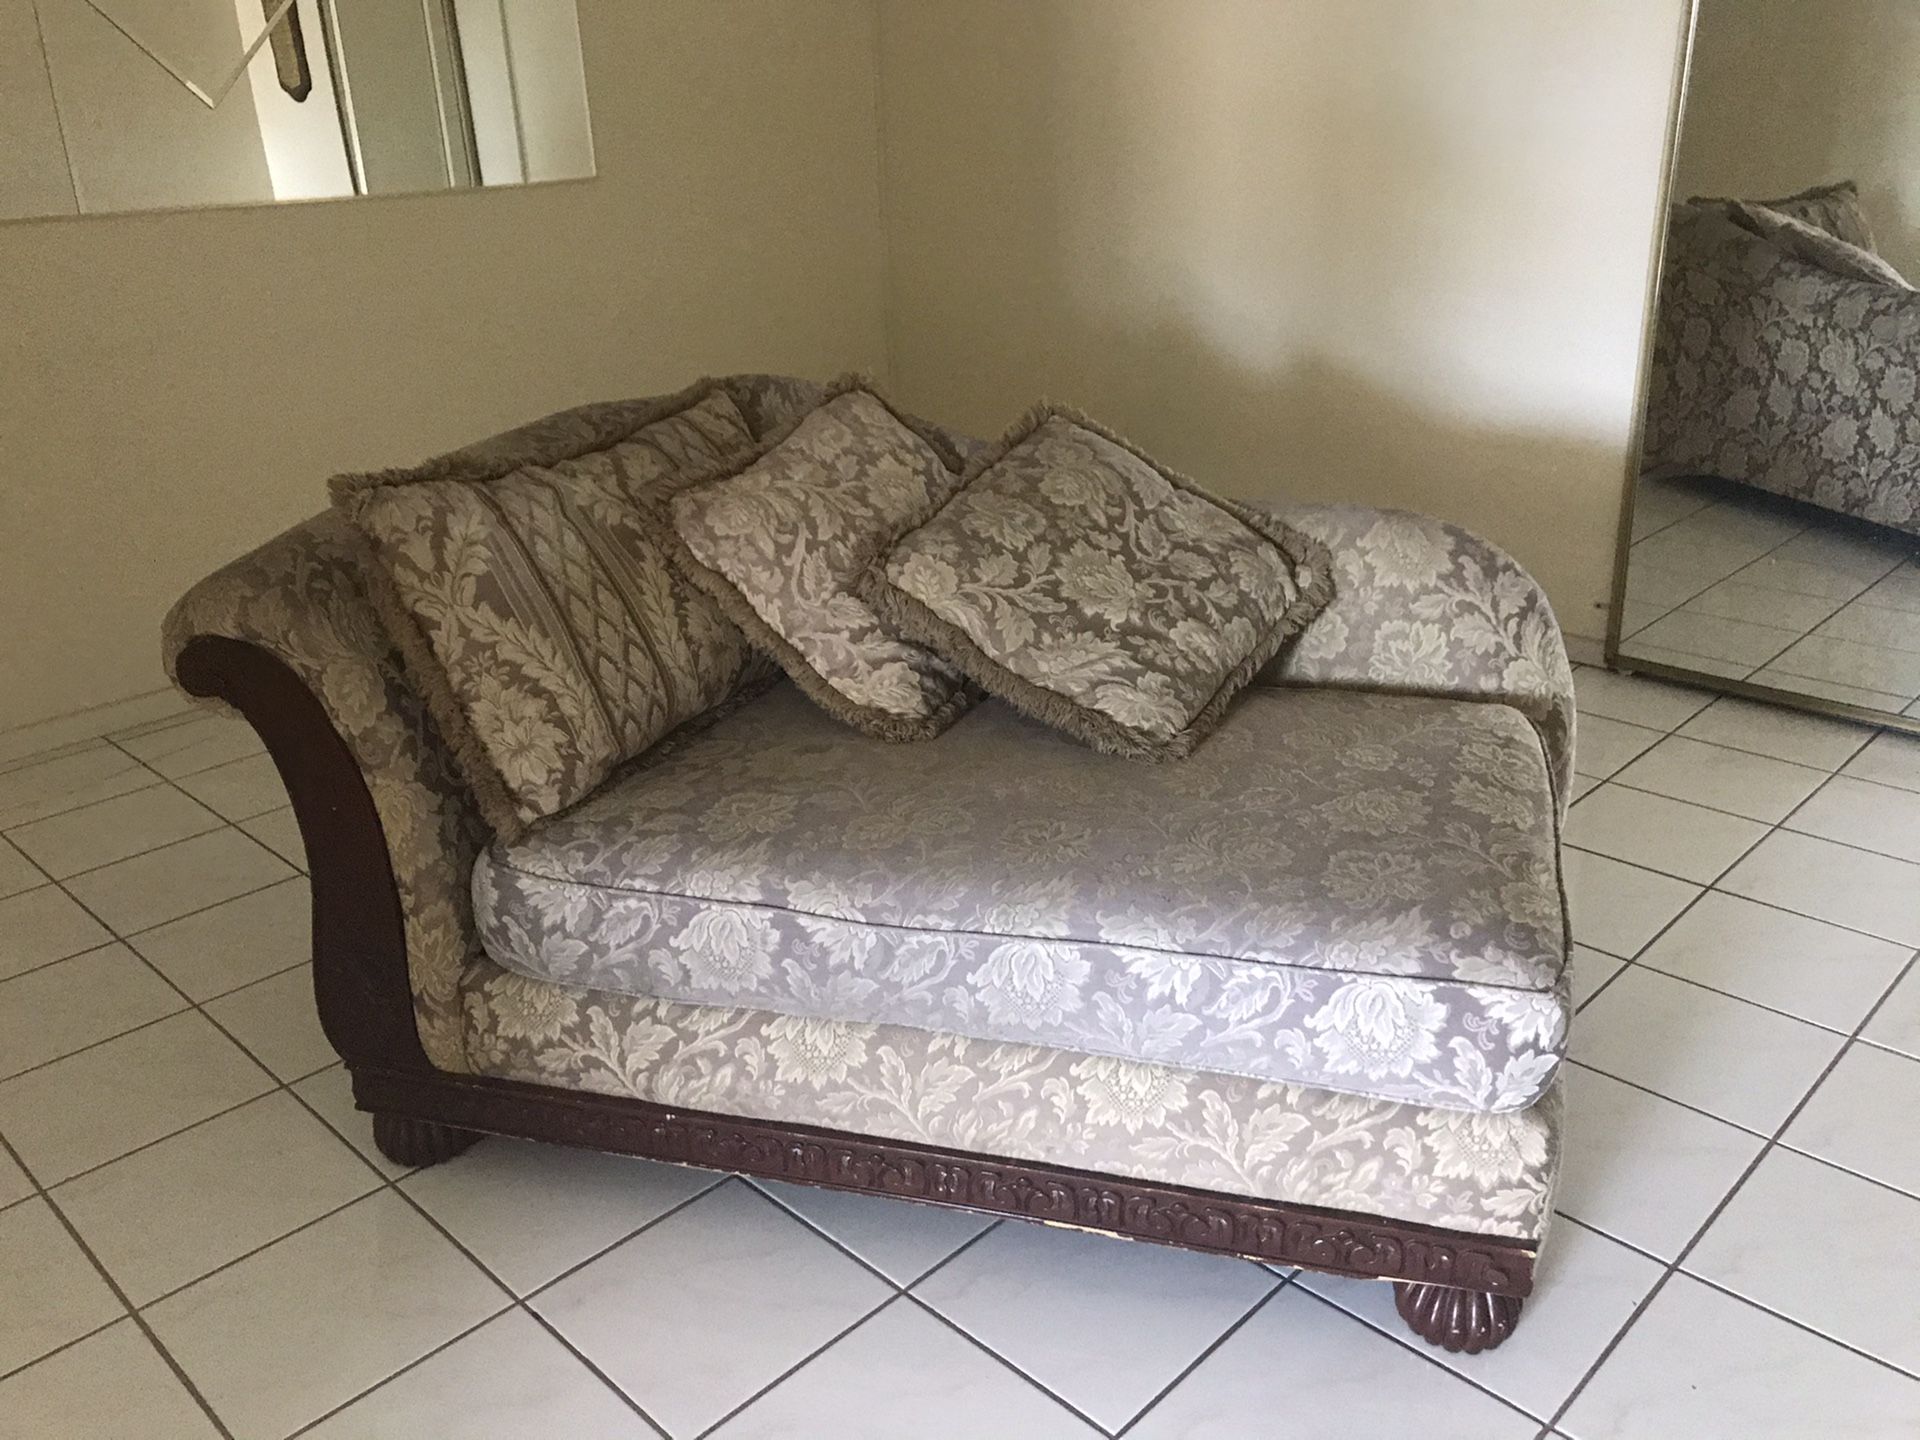 Clean good condition sofa $30